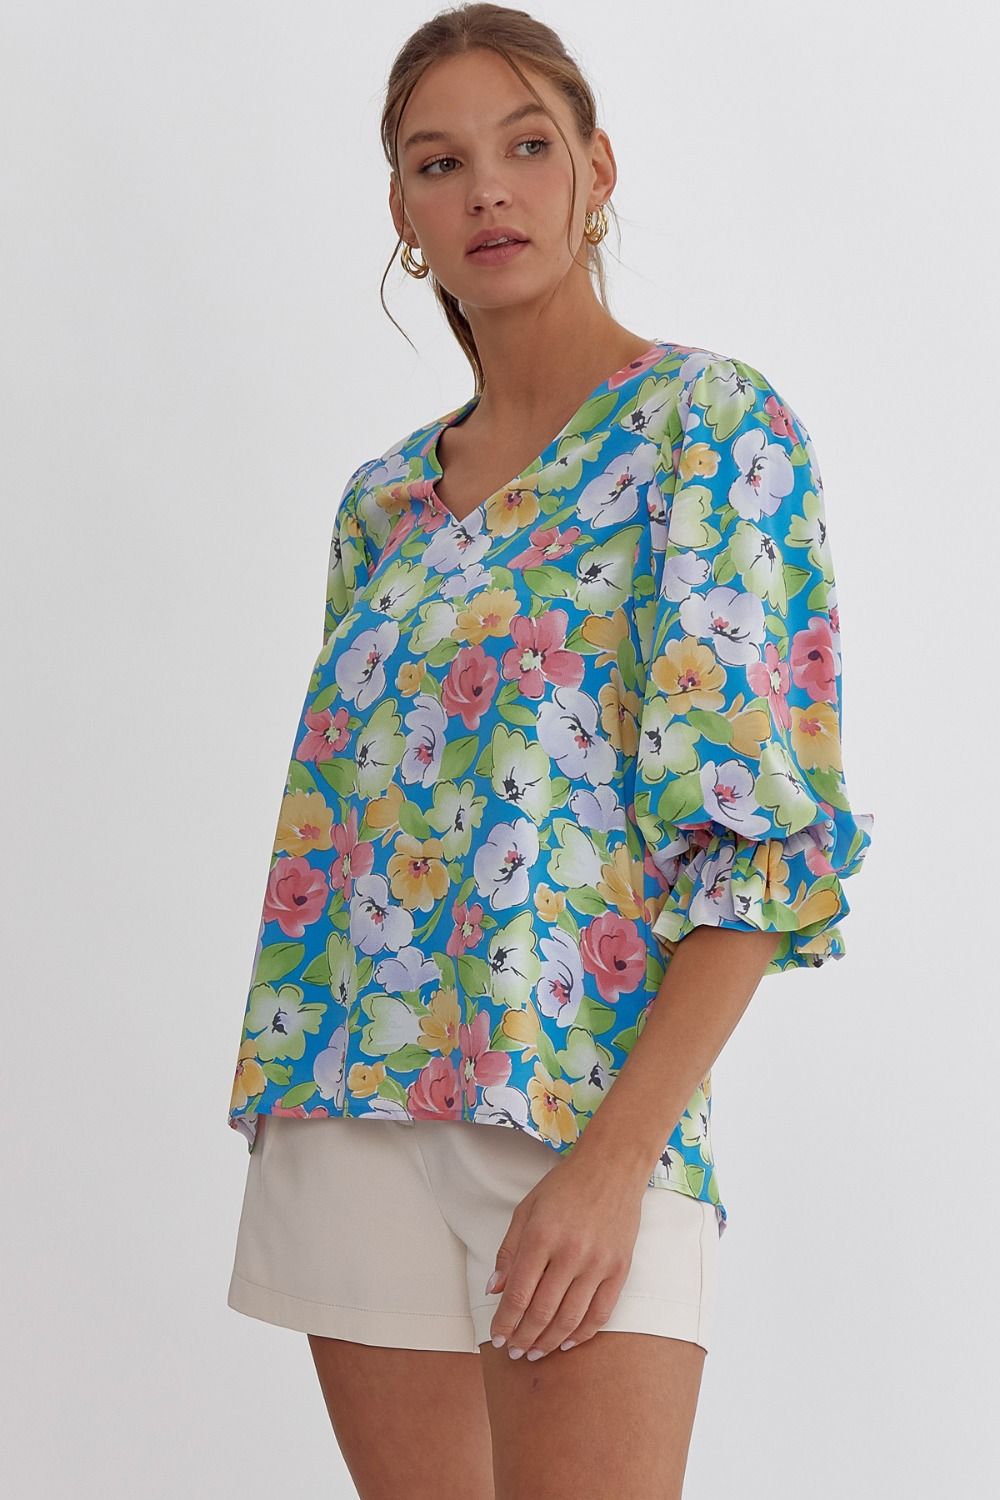 ENTRO INC Women's Top Floral Print V-Neck 3/4 Sleeve Top || David's Clothing